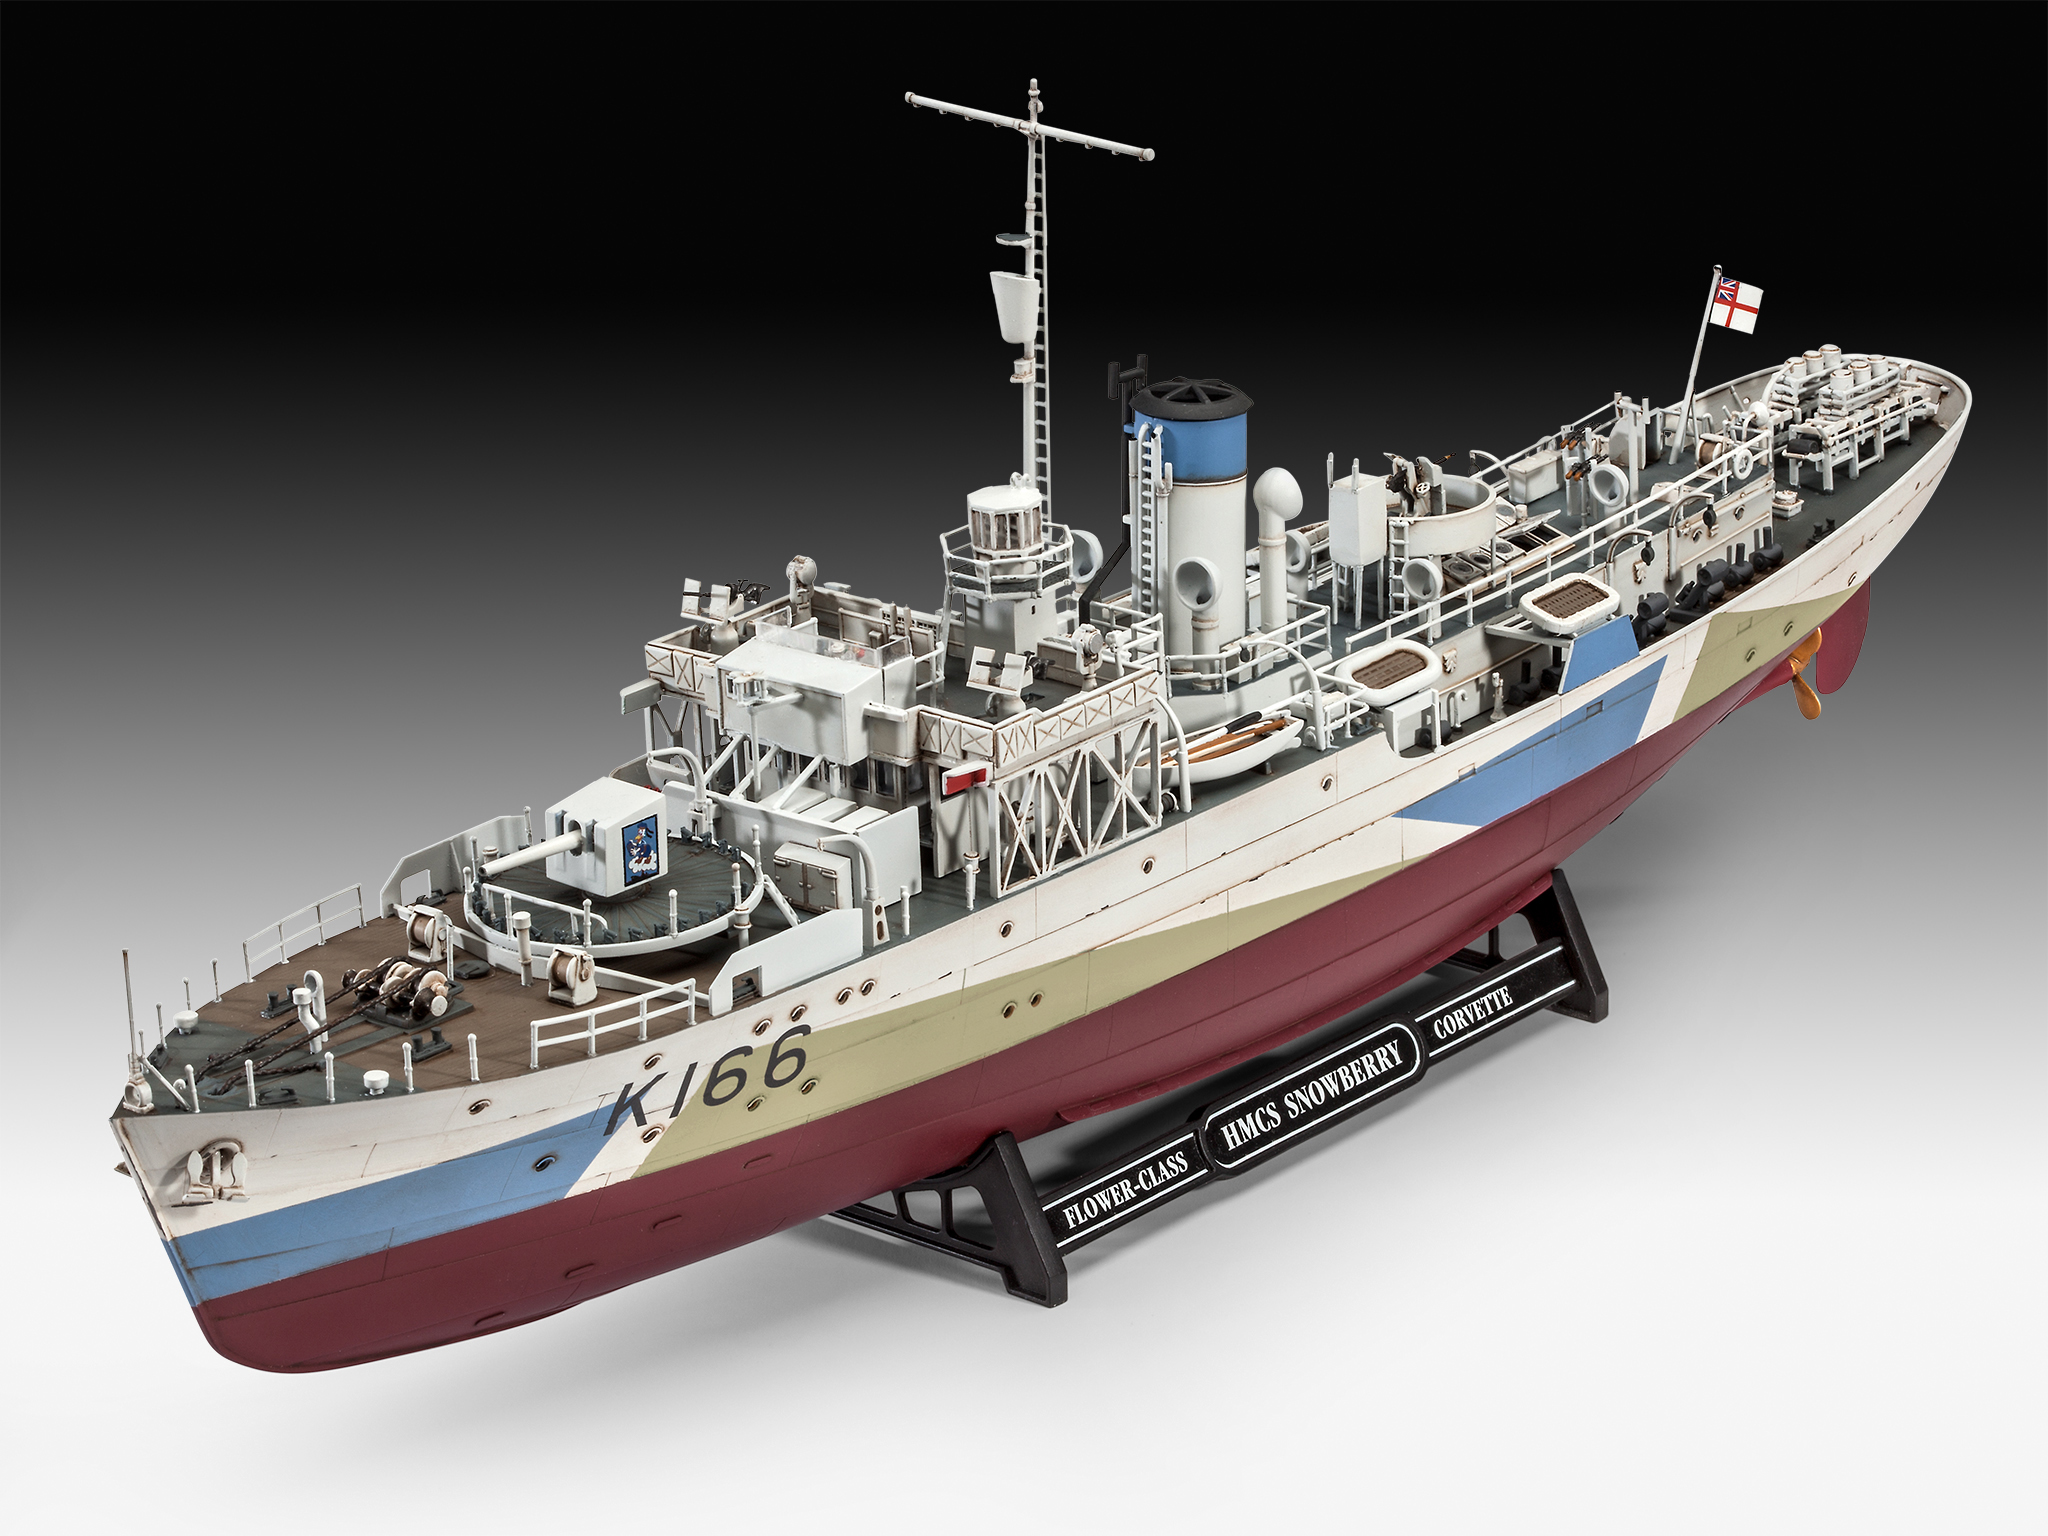 Mehrfarbig Snowberry HMCS Modellbausatz, REVELL